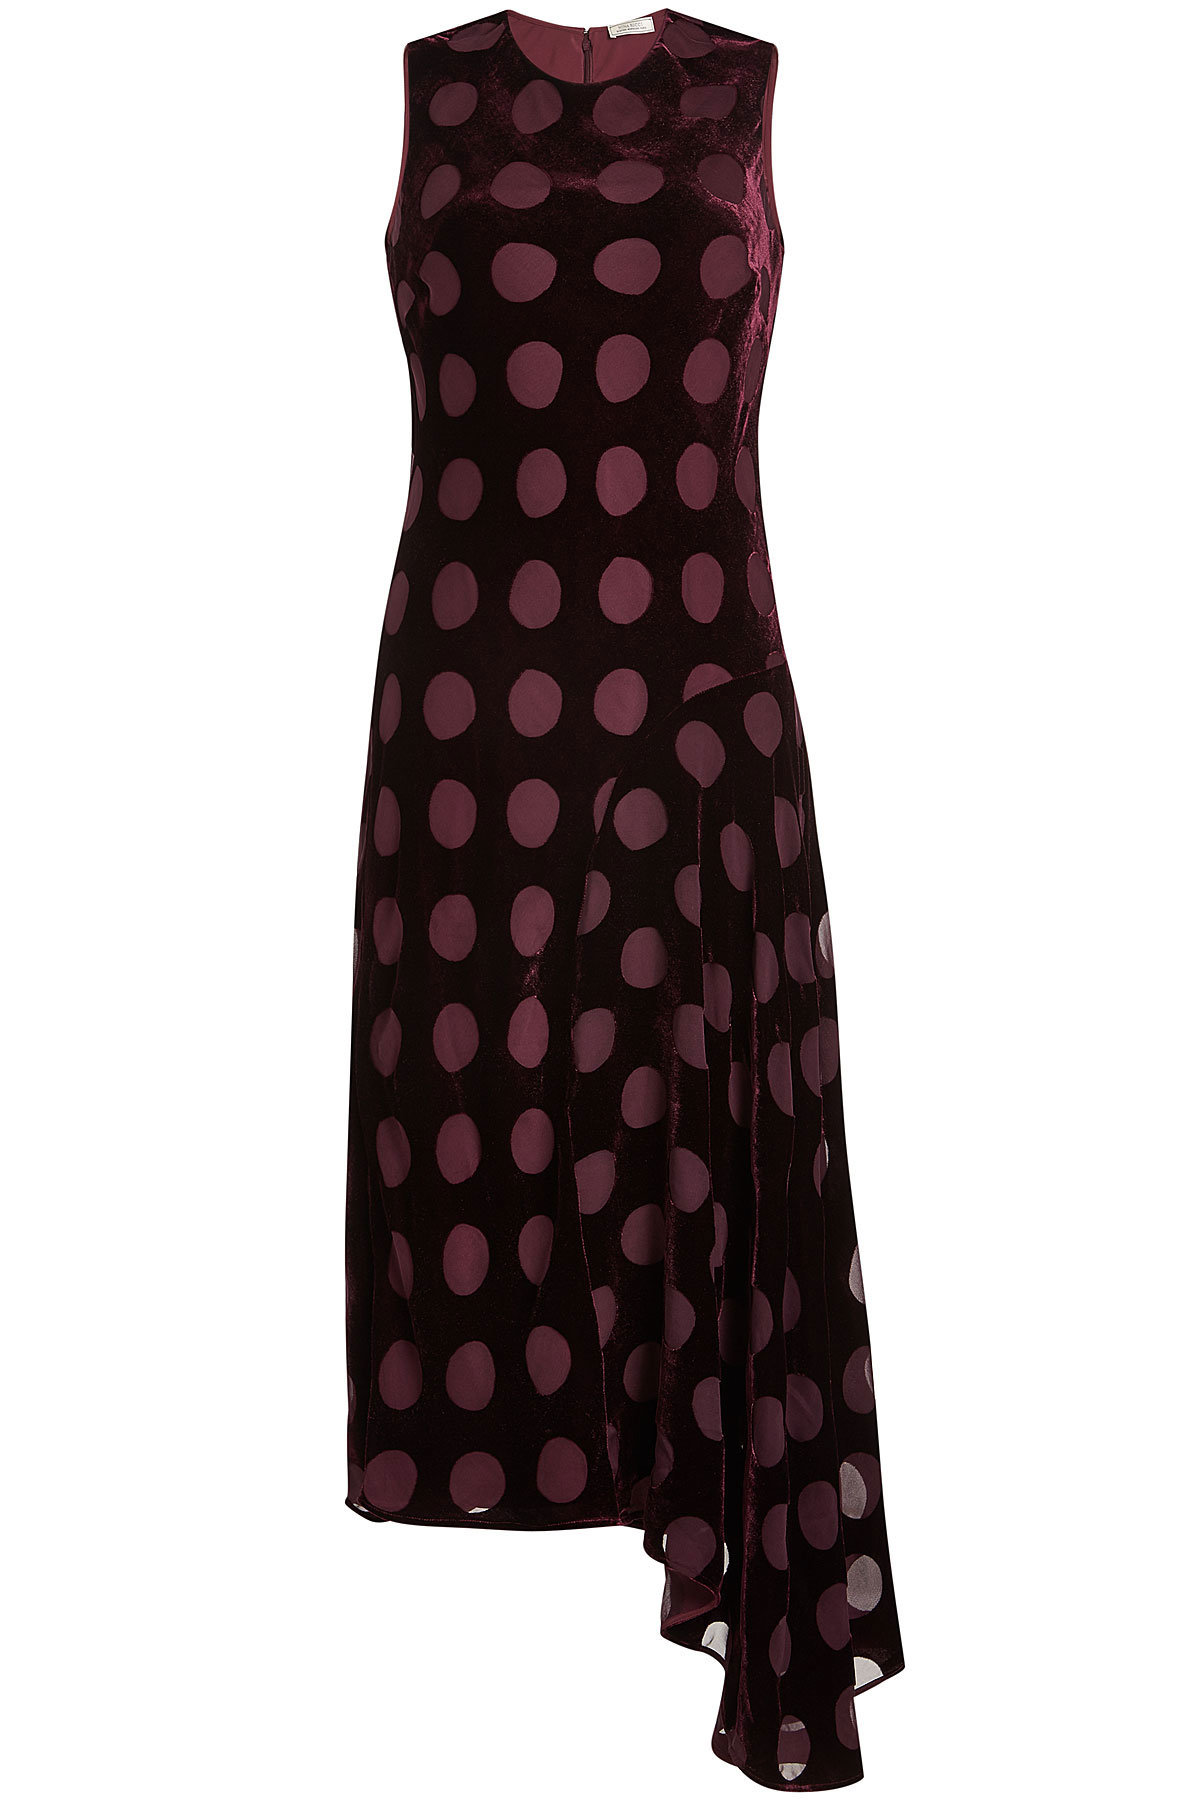 Velvet Dress with Chiffon Spots by Nina Ricci